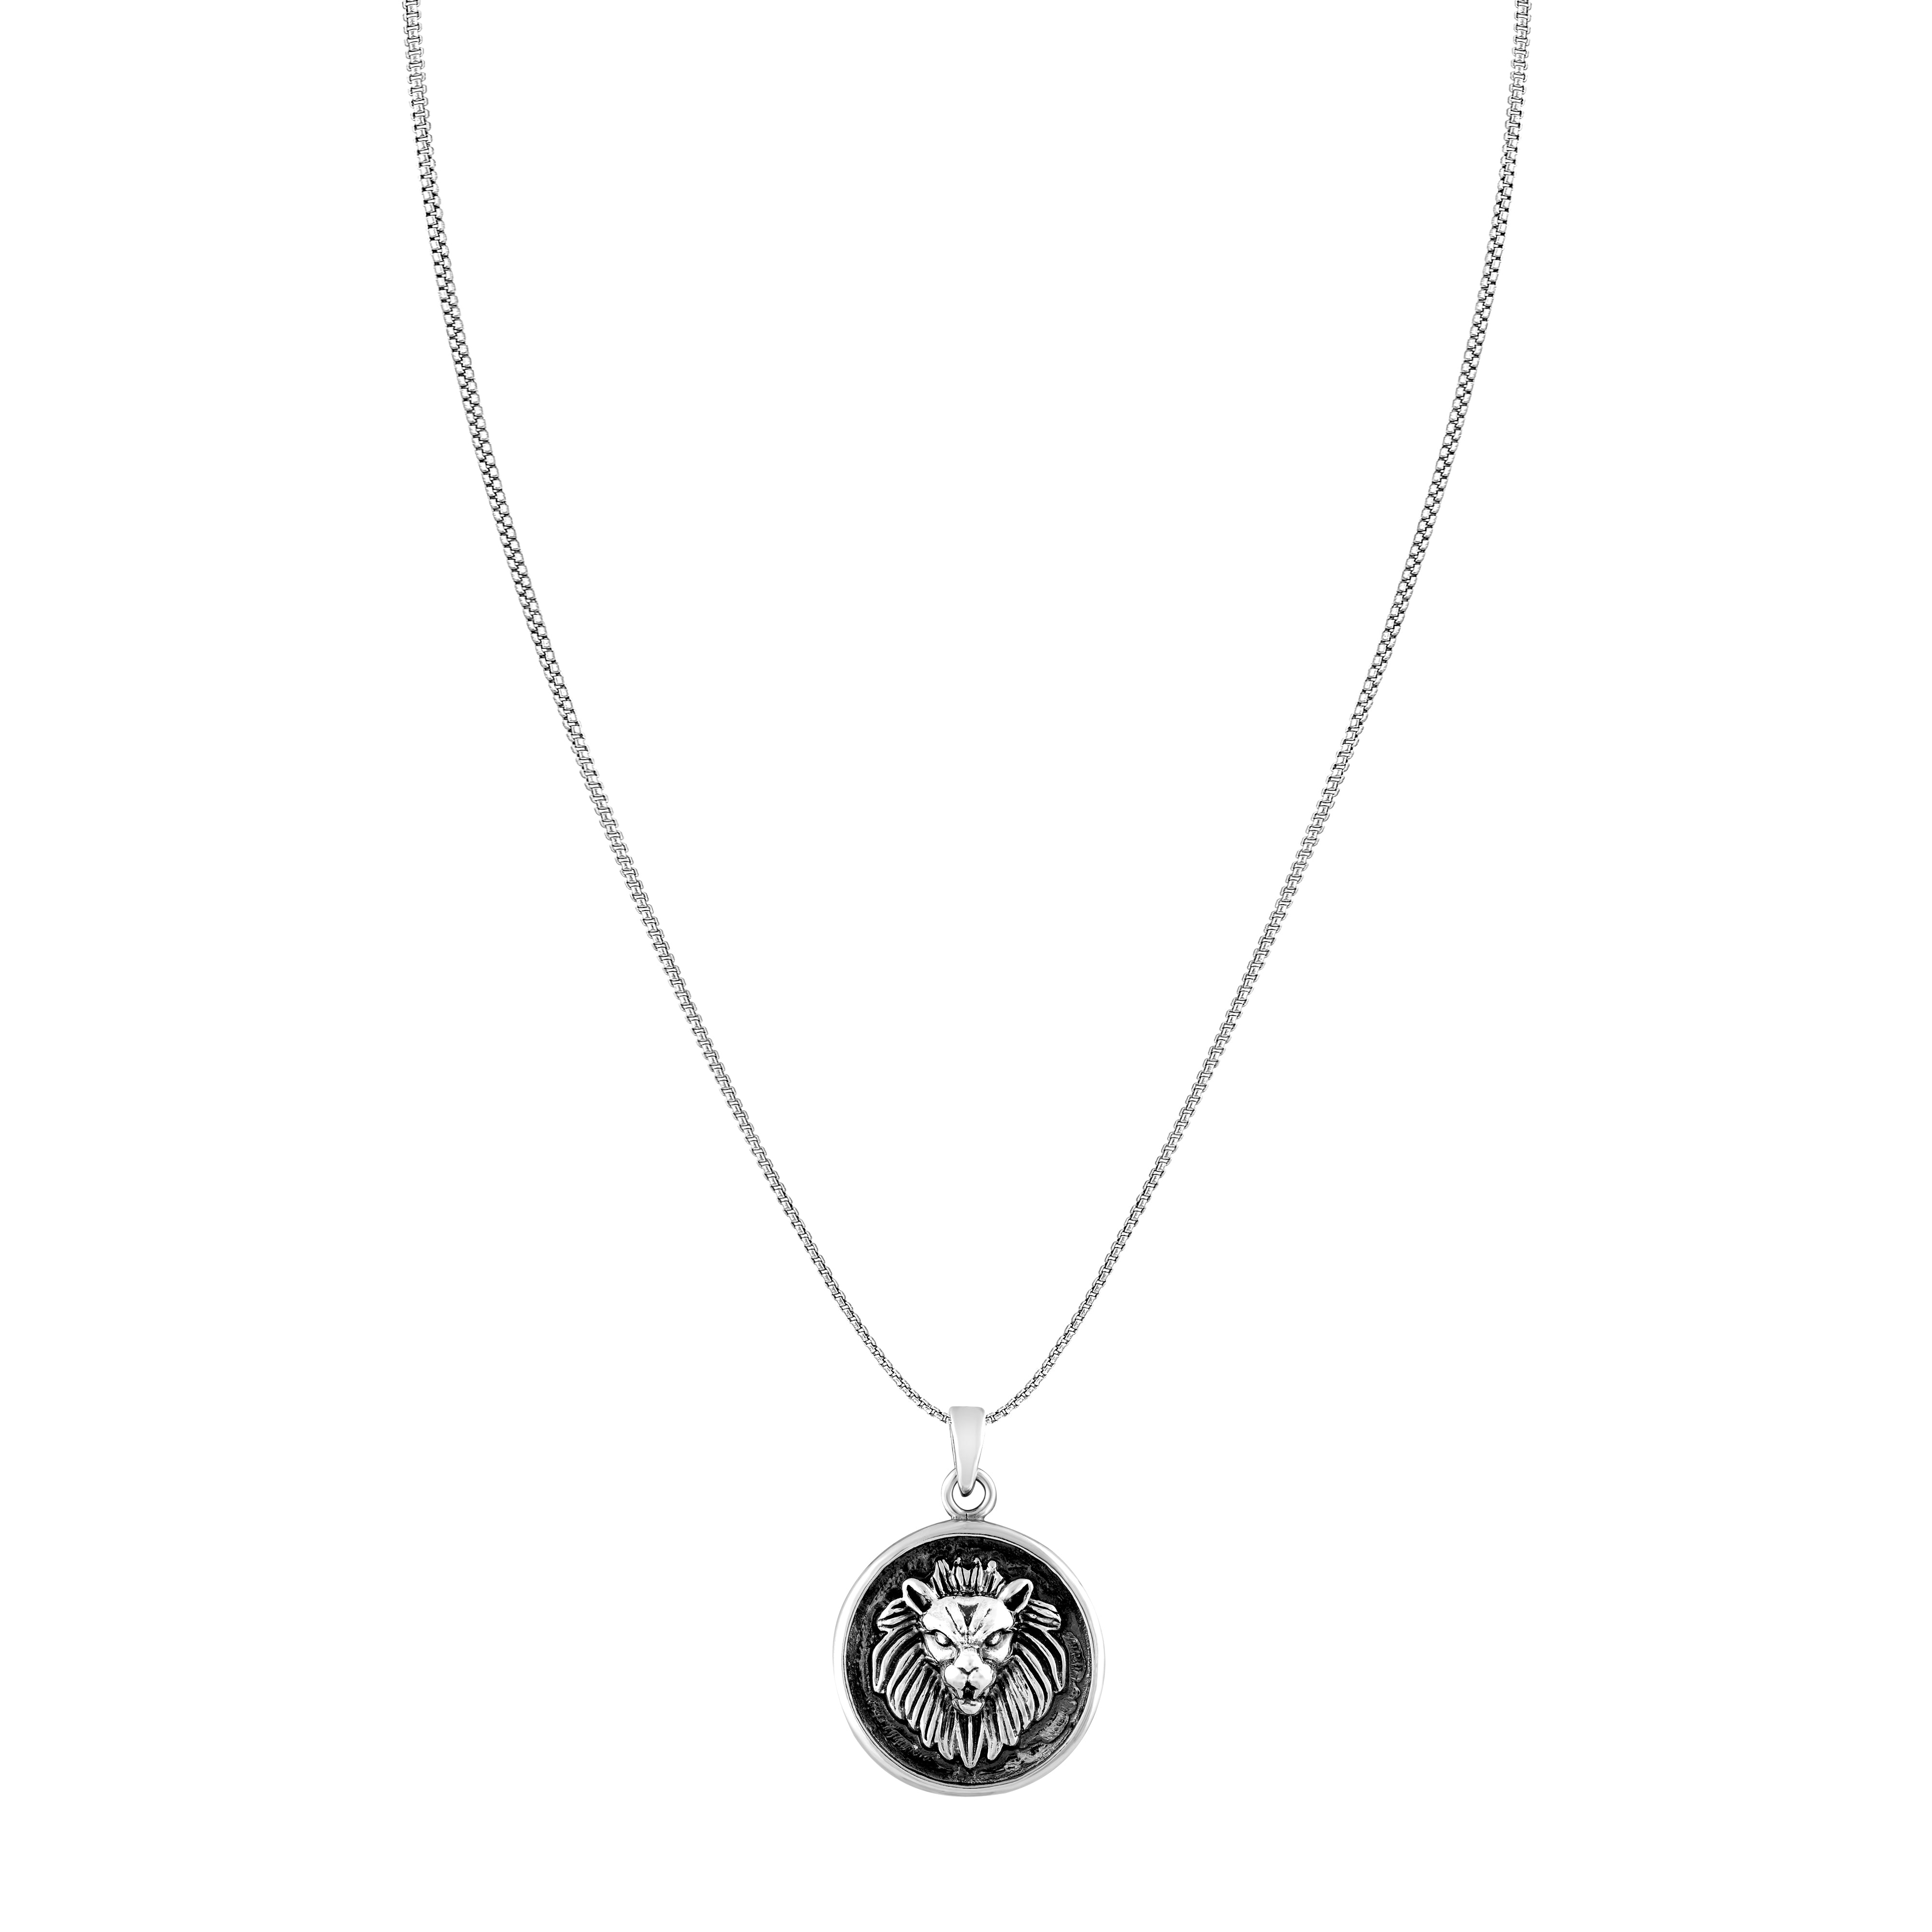 925 Sterling Silver Oxidized Lion Pendant Necklace for Men